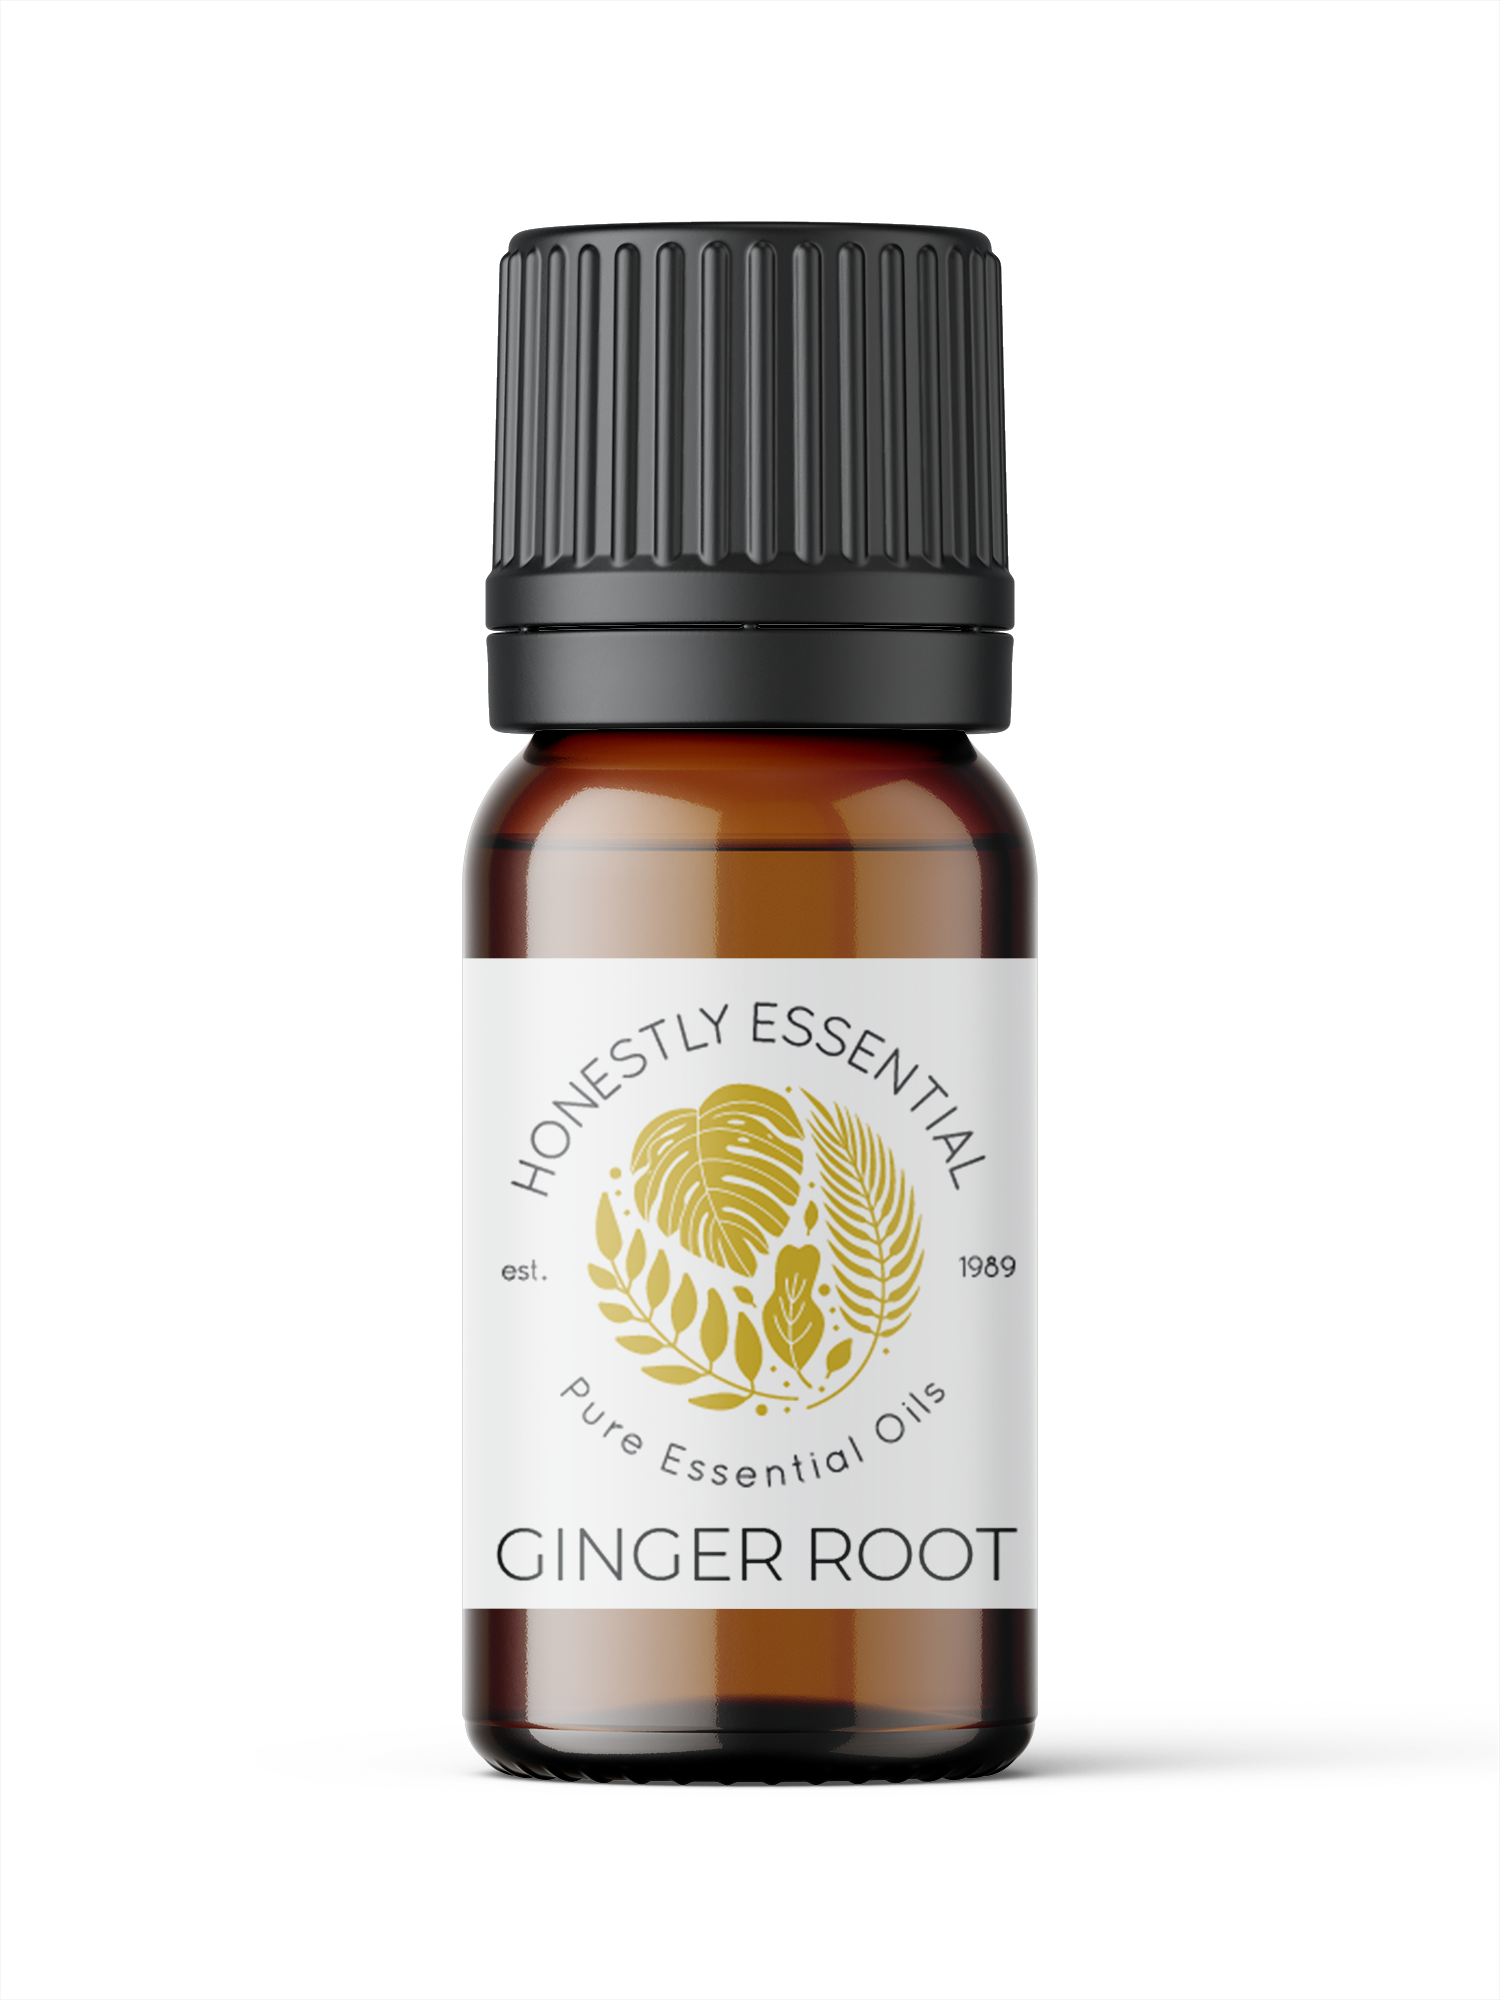 Ginger Root Essential Oil - Essential Oils | Honestly Essential Oils digestion, immunity, kid safe, pain, pain reliever, spice, spice essential oil, spices